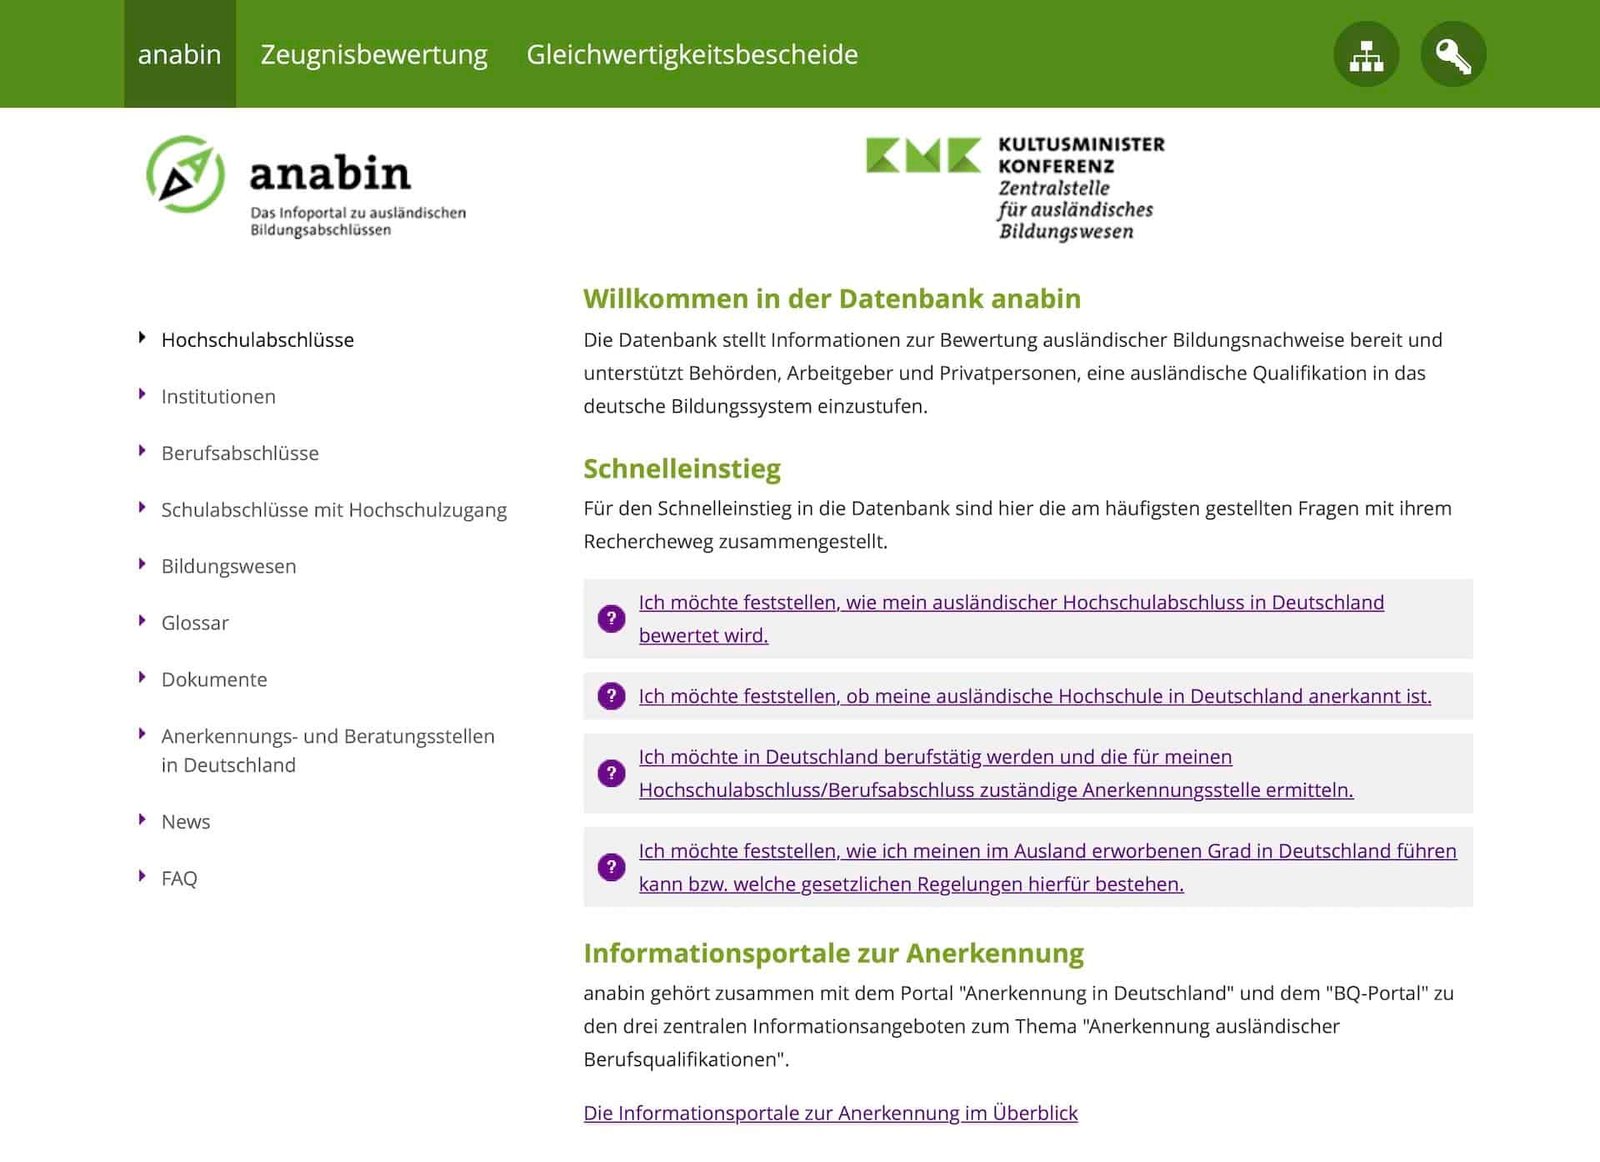 Anabin's homepage